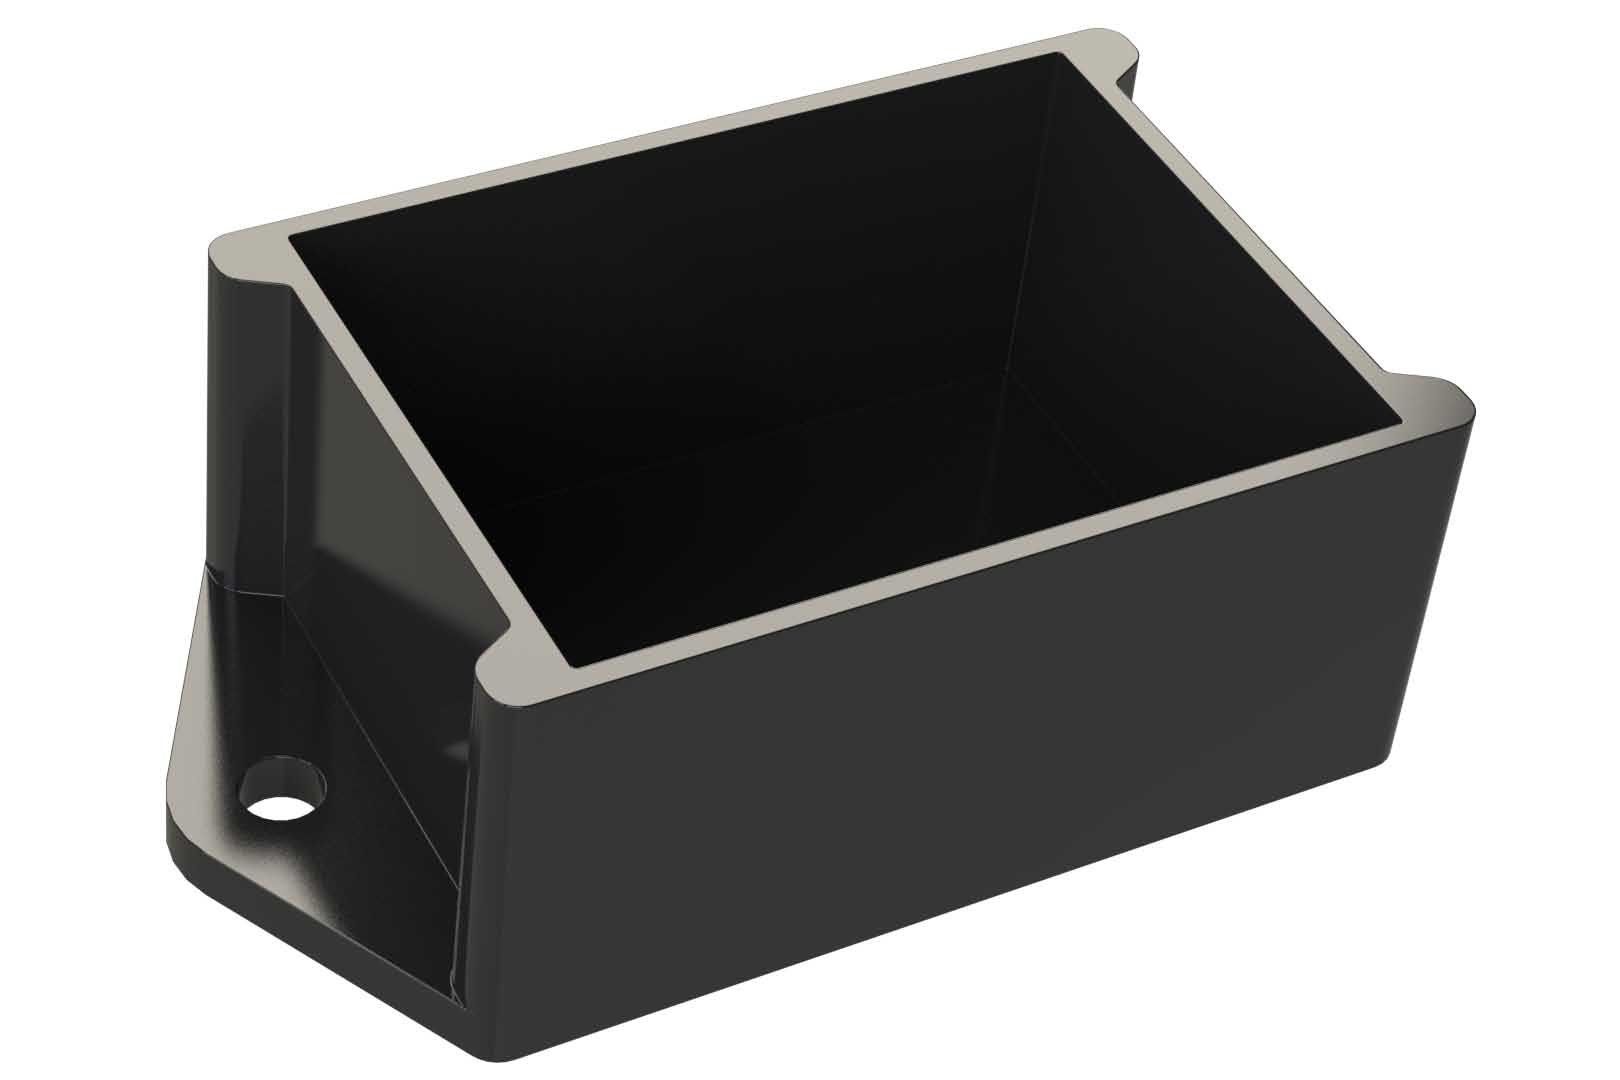 FB17 Project ABS Plastic Box Case Black Size 63x115x23 mm. 